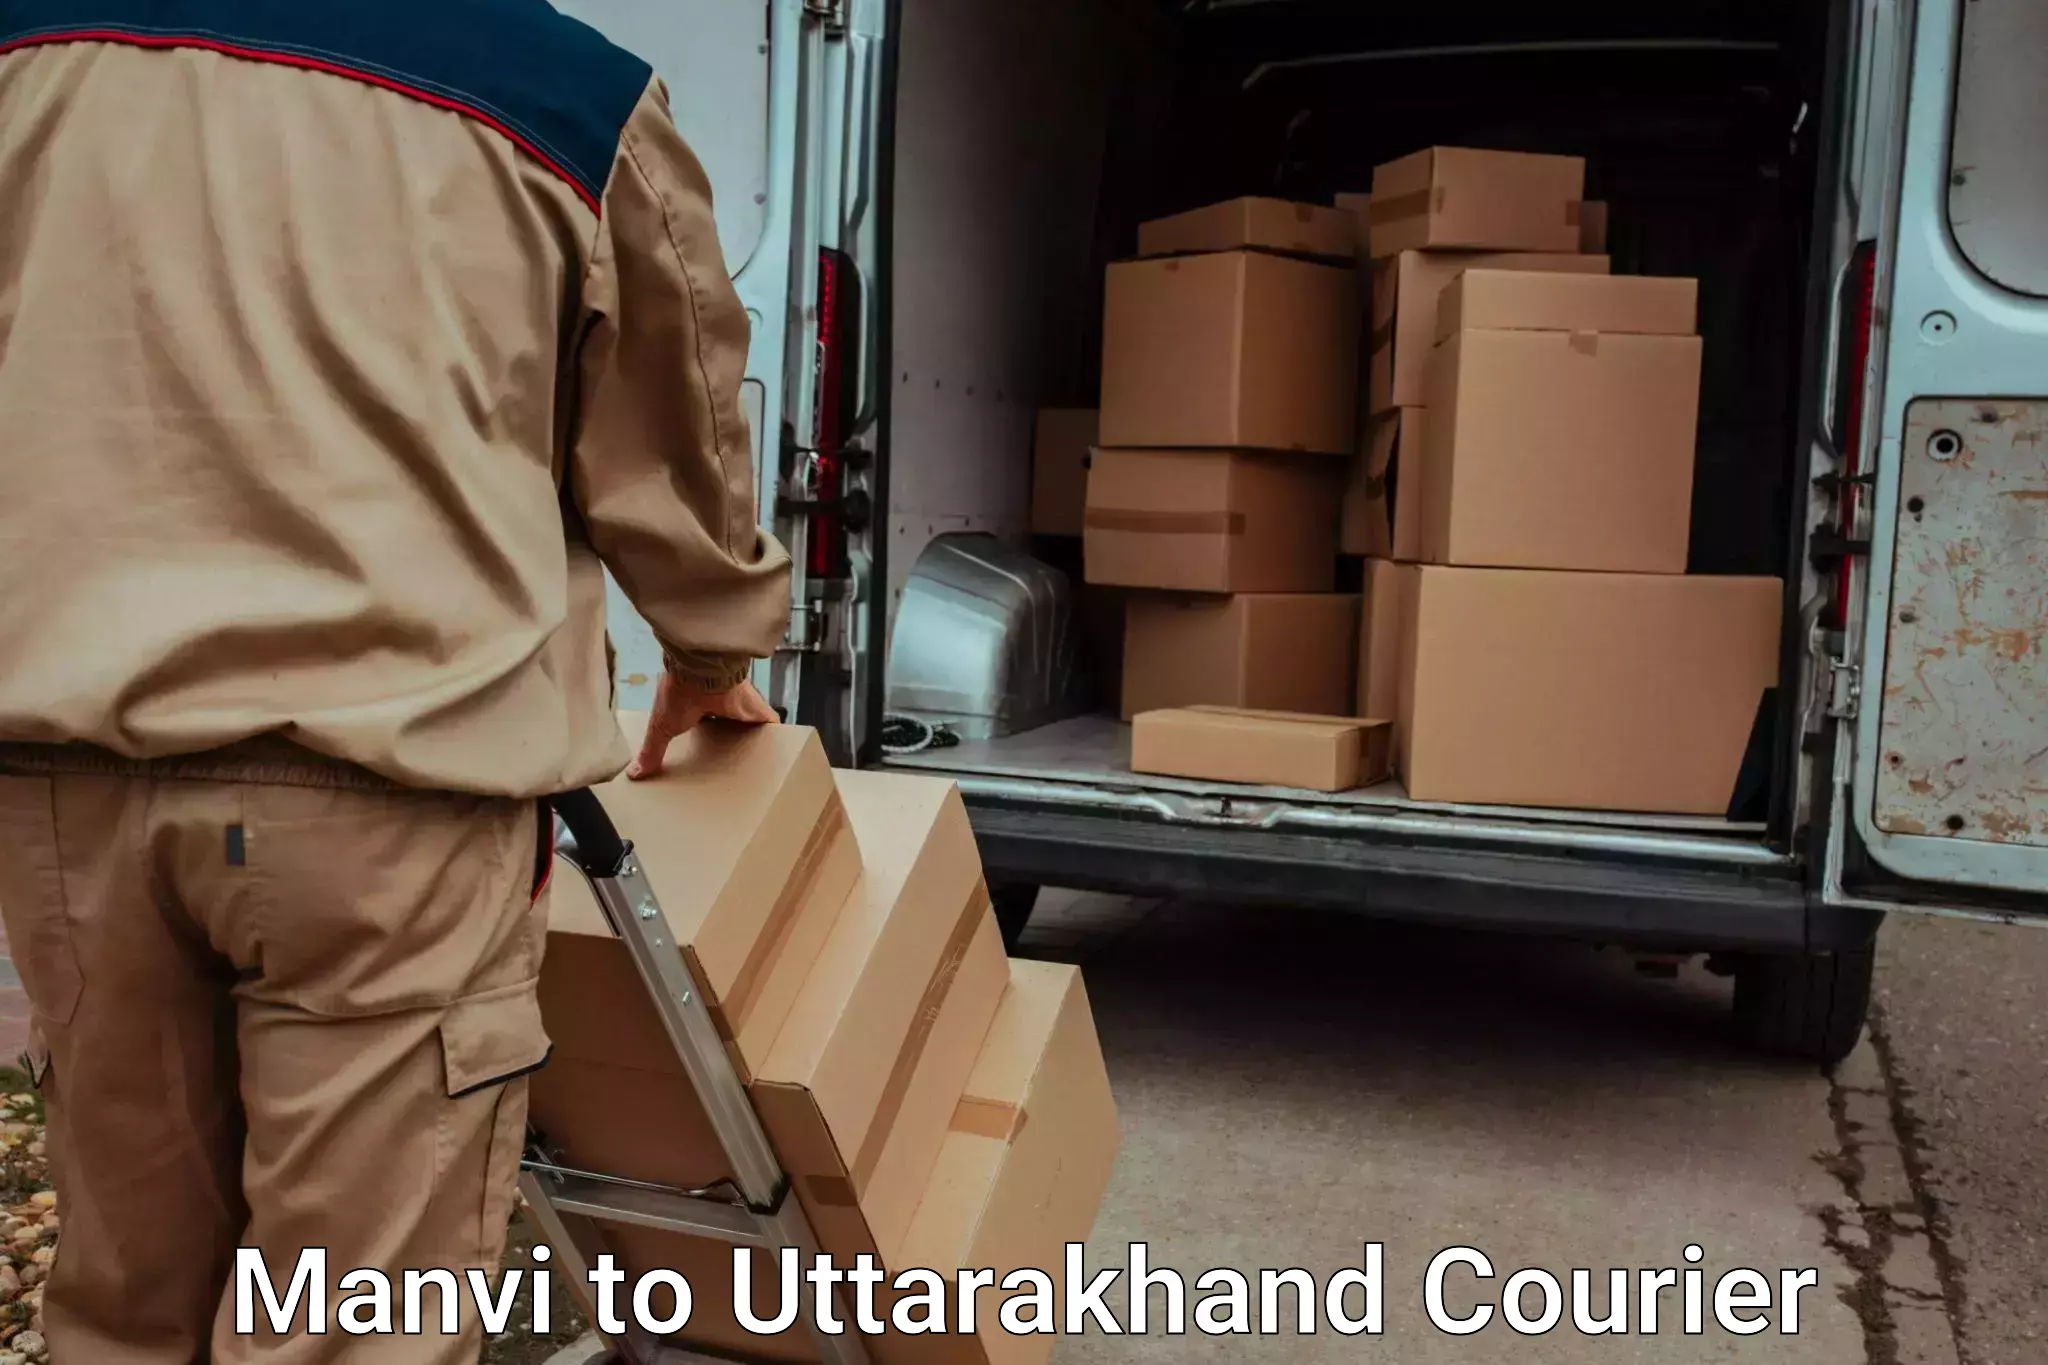 Budget-friendly movers Manvi to Uttarakhand